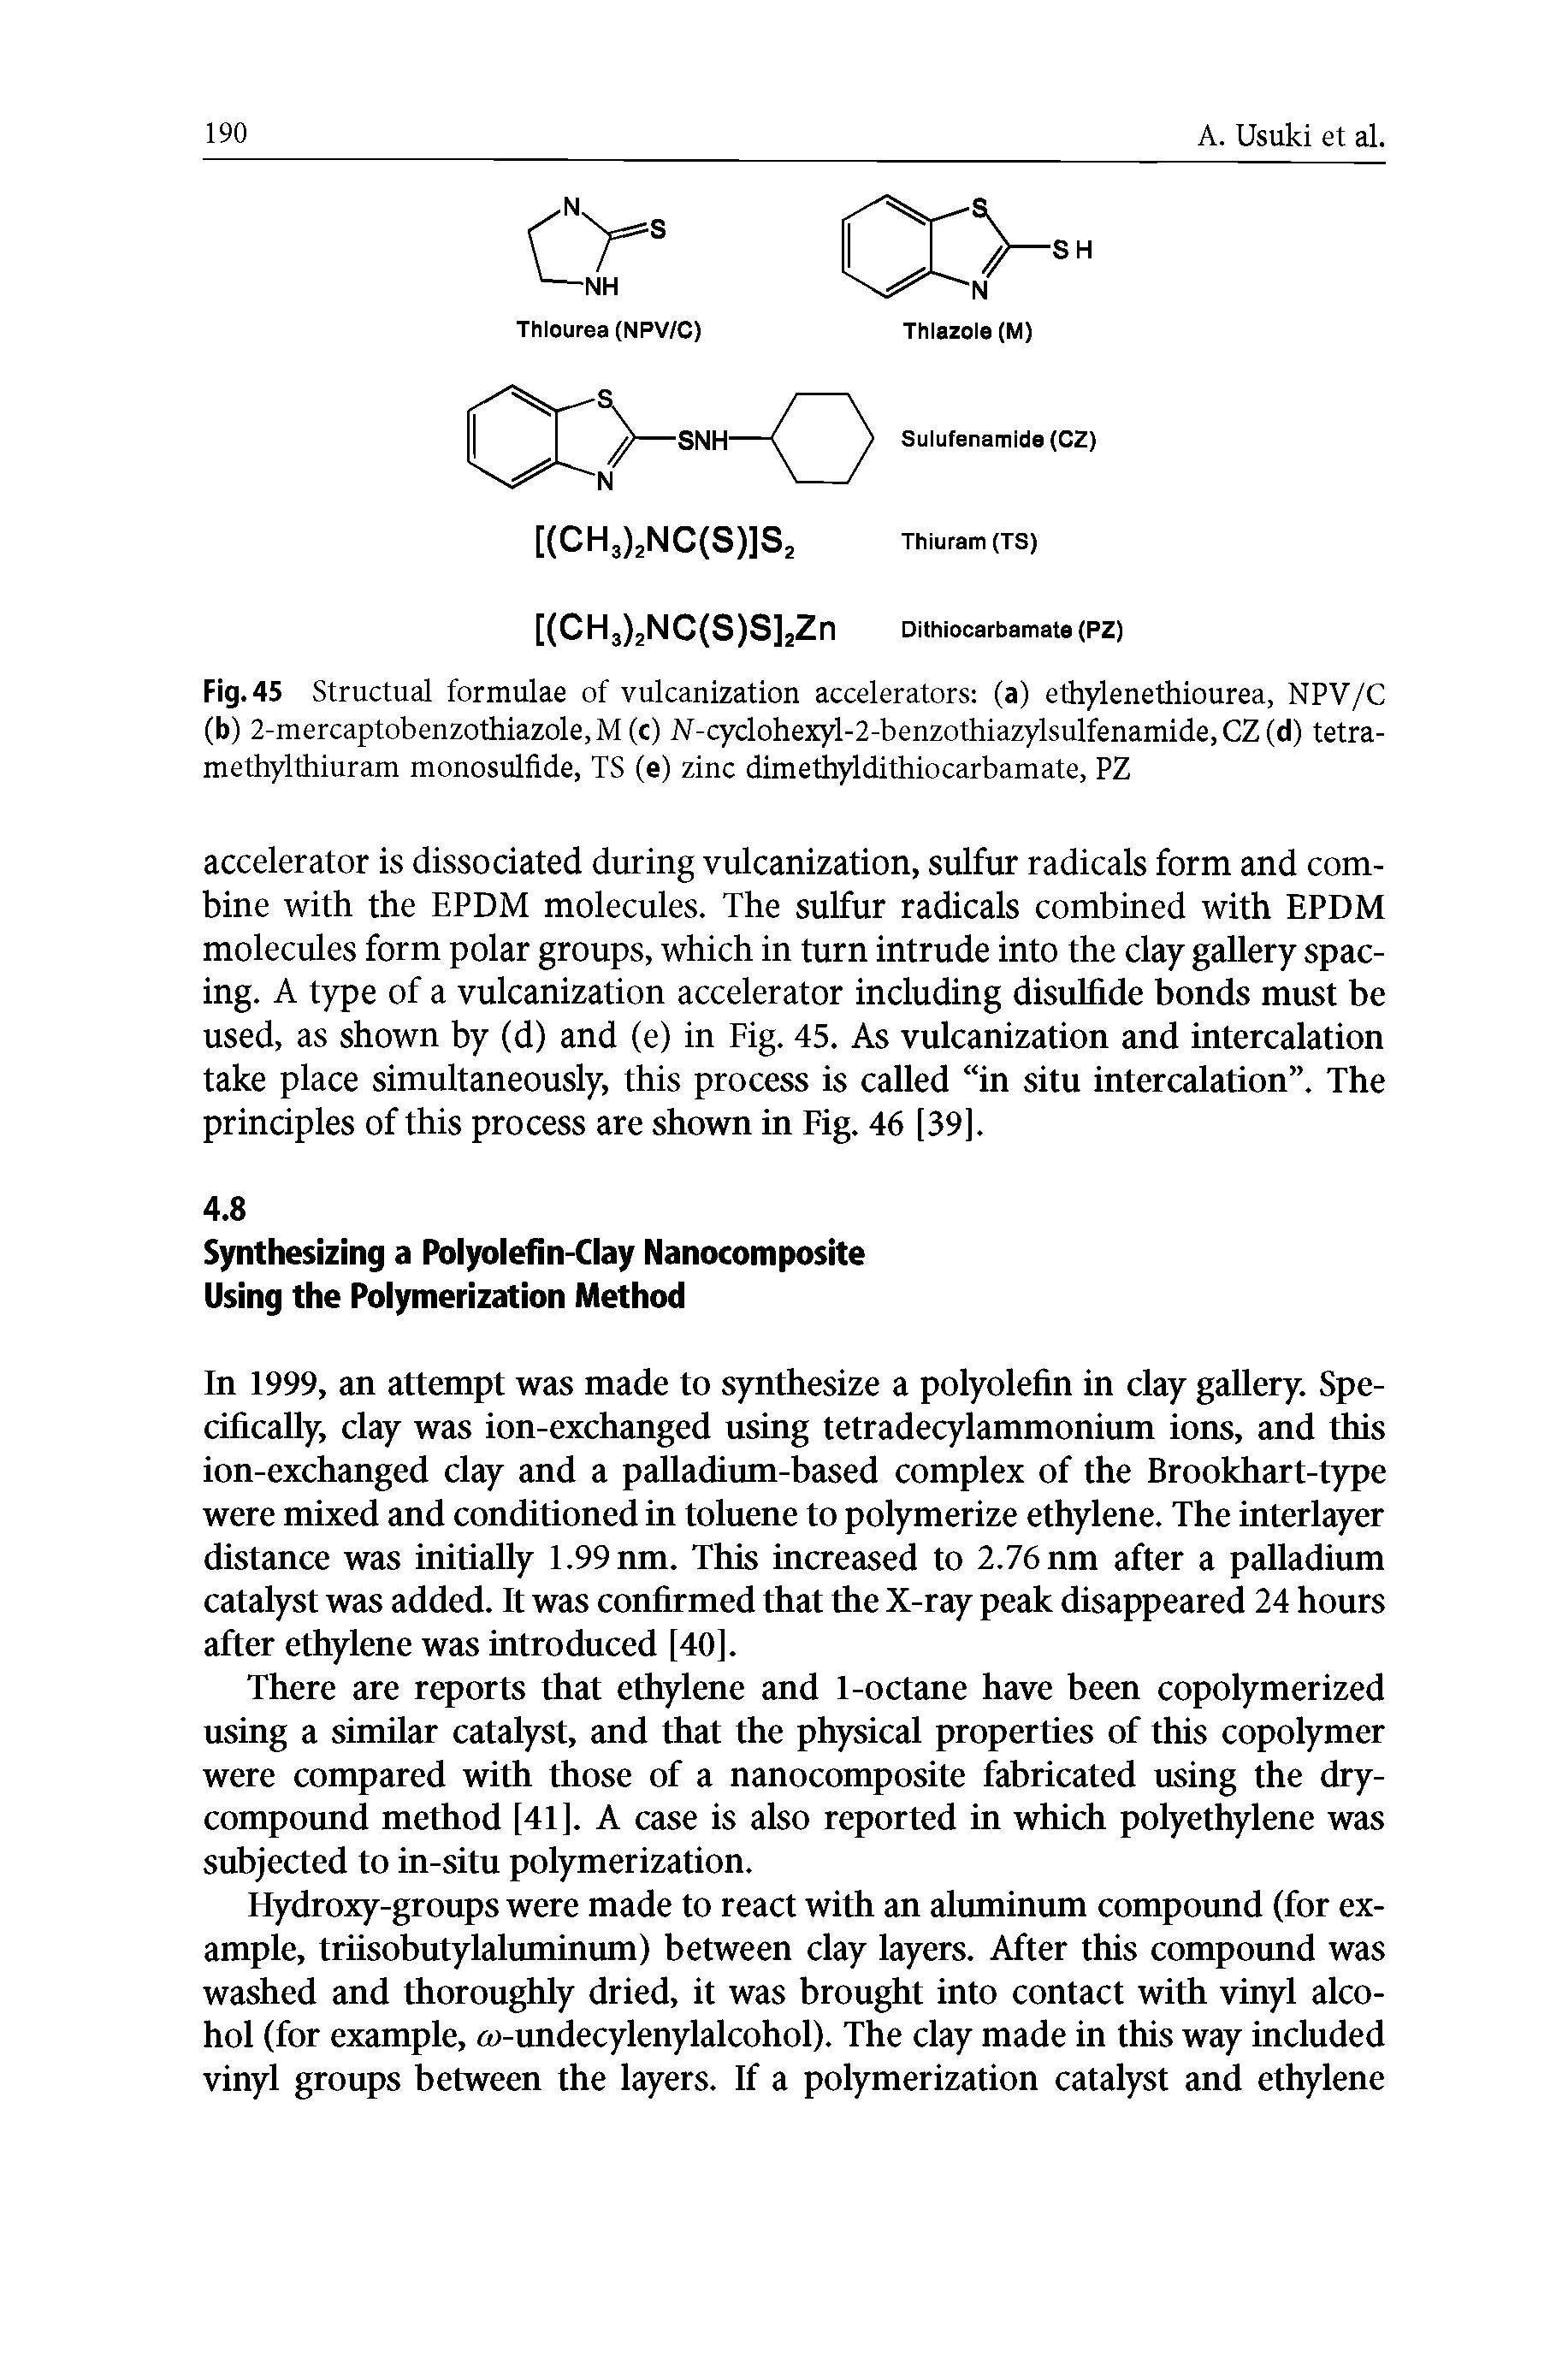 Fig. 45 Structual formulae of vulcanization accelerators (a) ethylenethiourea, NPV/C (b) 2-mercaptobenzothiazole,M(c) N-cydohexyl-2-benzothiazylsulfenamide, CZ (d) tetra-methylthiuram monosulfide, TS (e) zinc dimeftyldithiocarbamate, PZ...